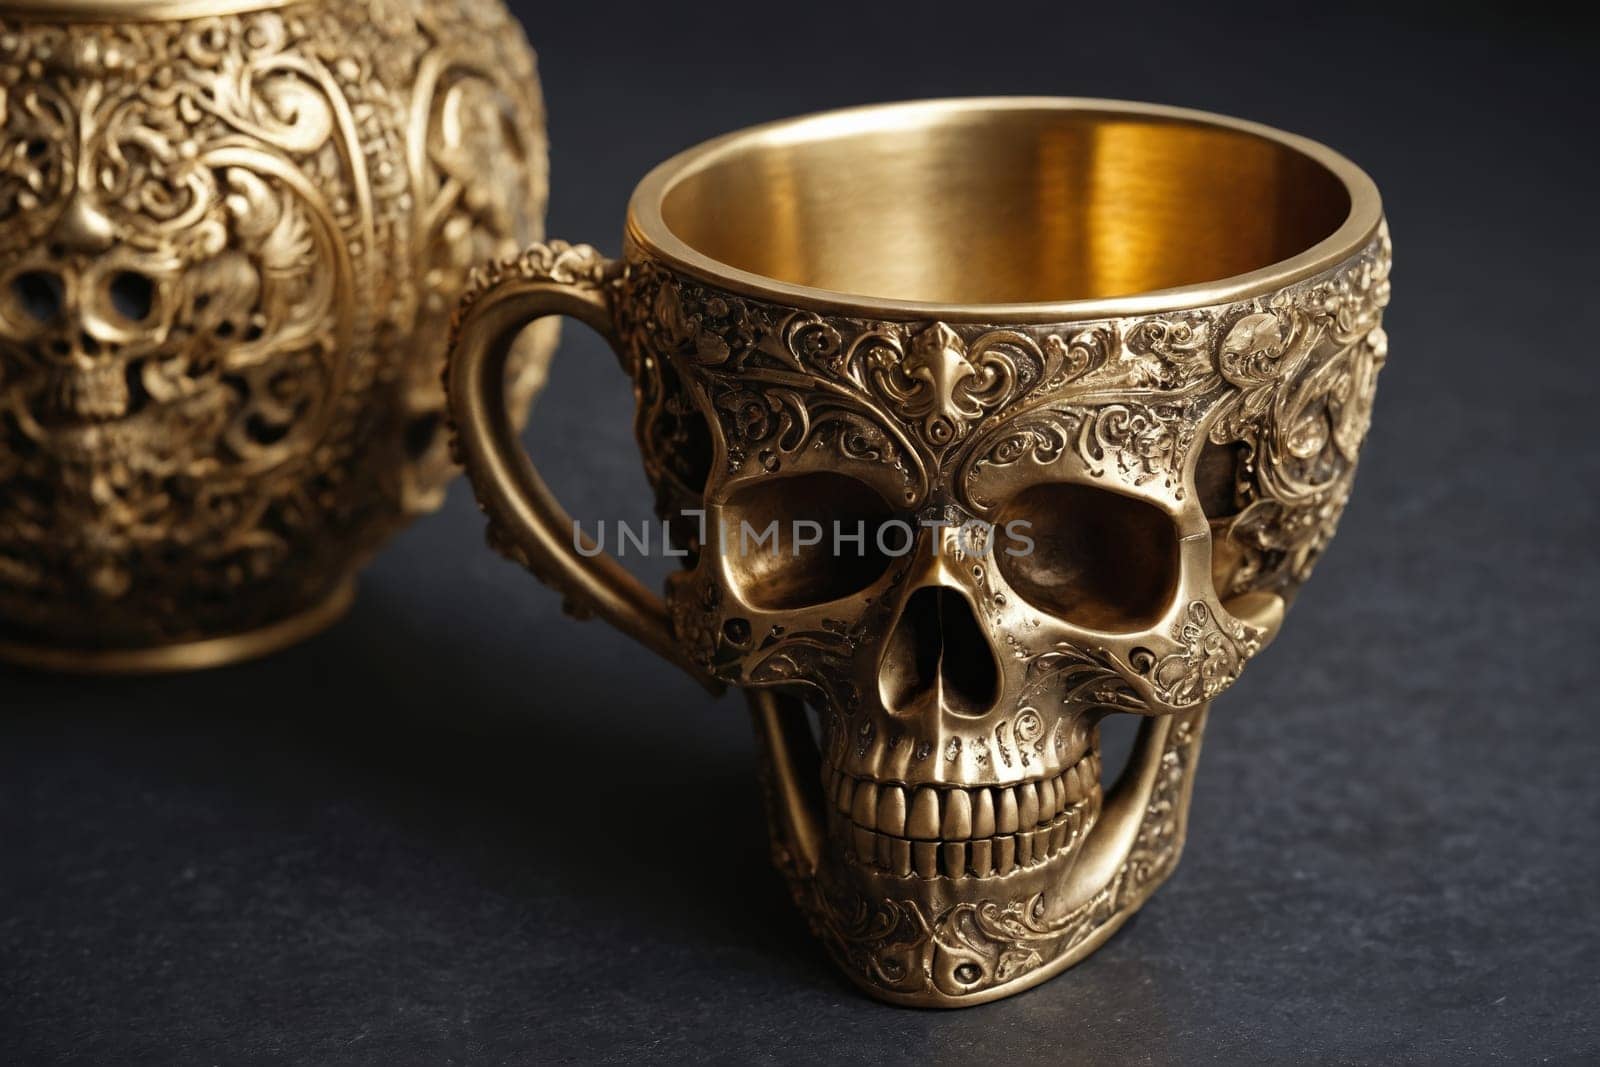 Heritage of Shadows: Historically Inspired Skull Mug by Andre1ns